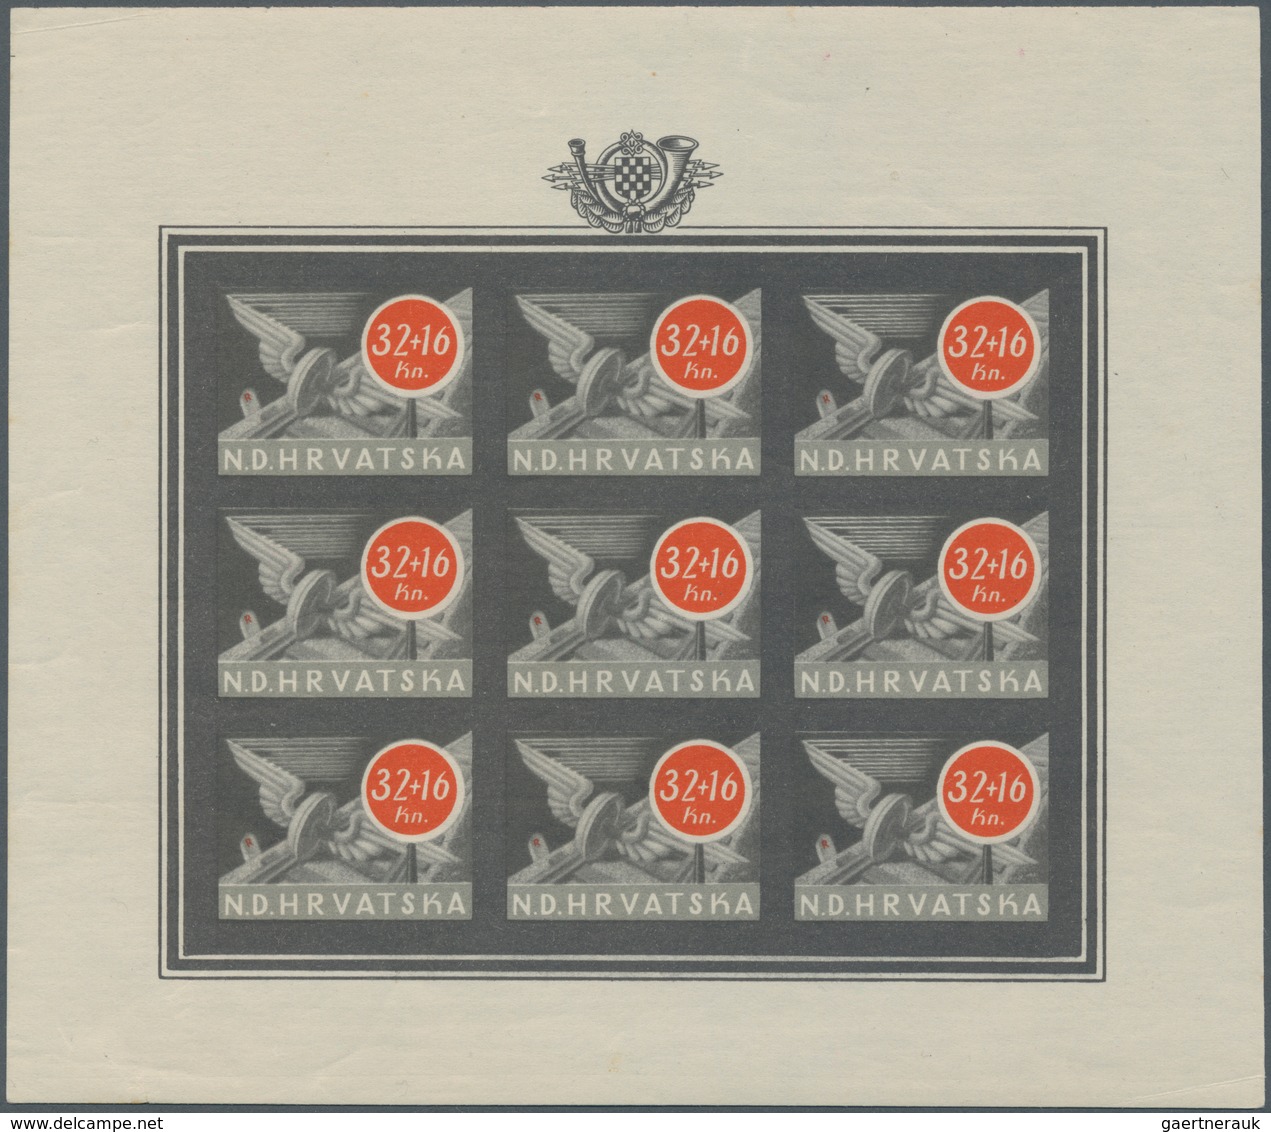 Kroatien: 1944. (1 Feb). Postal and Railway Employees Relief Fund. VARIETY 7K + 3.50K light brown/da